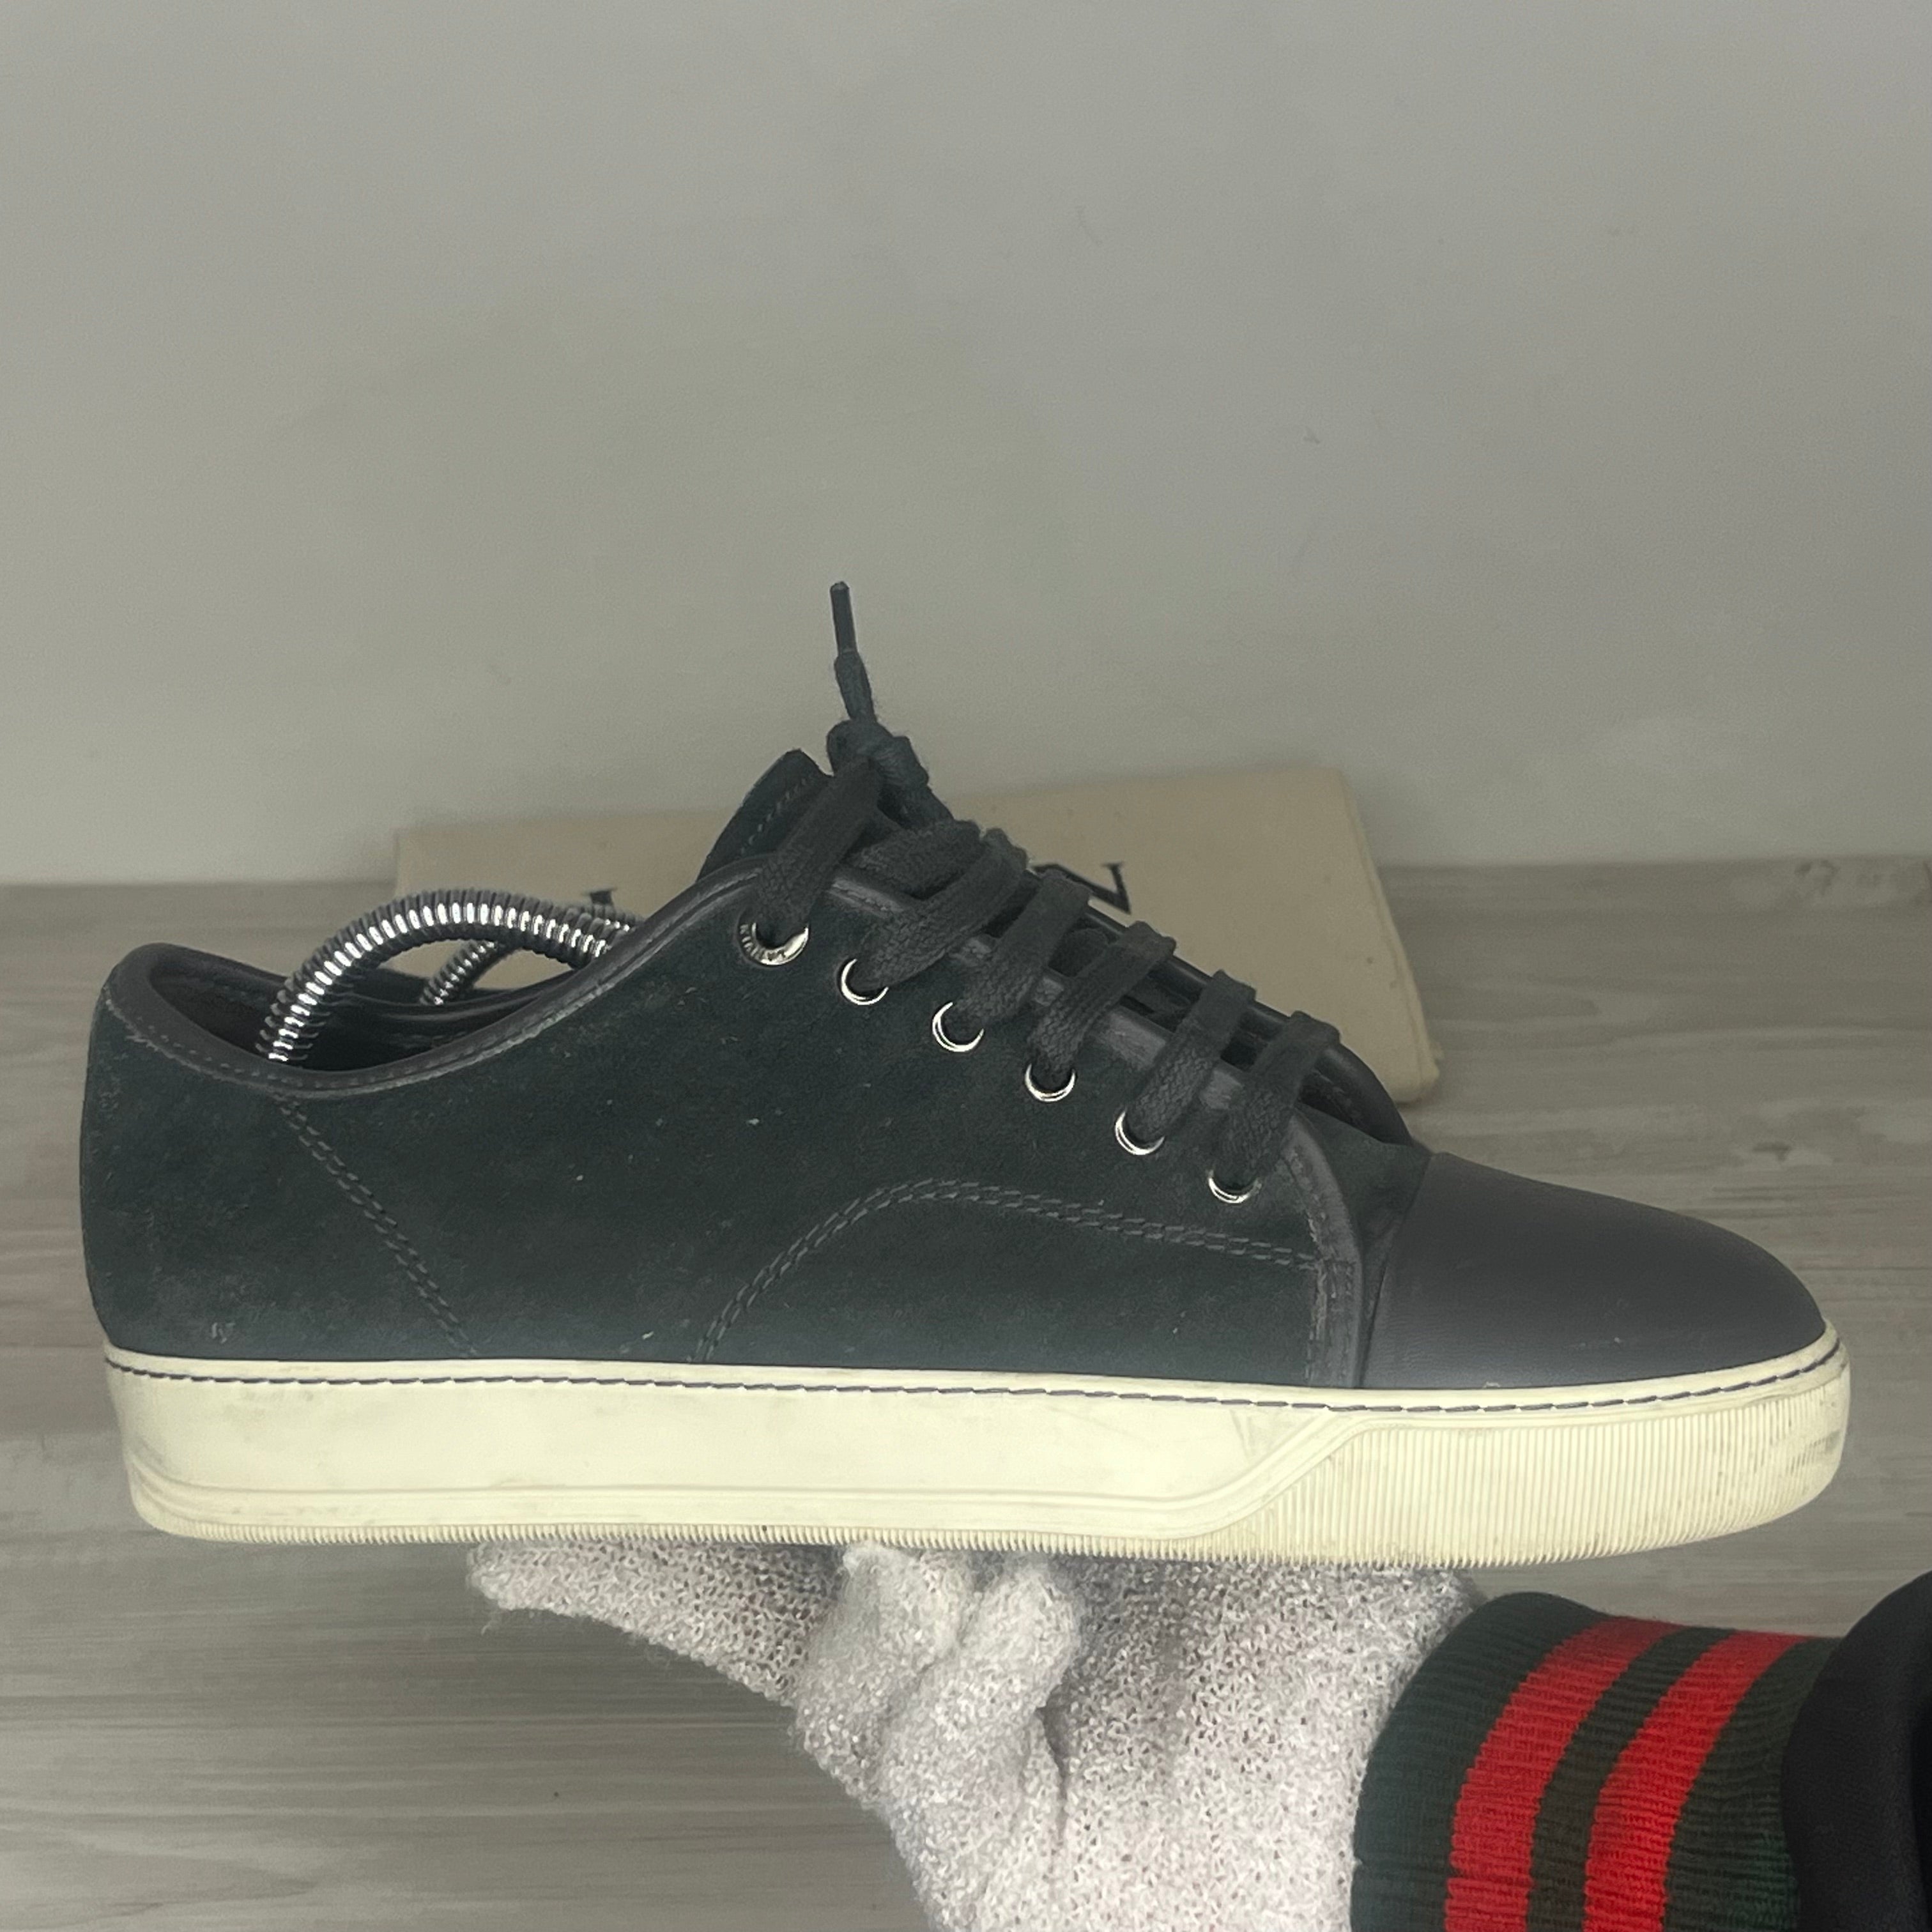 Lanvin Sneakers, Dark Green Suede 'Mat Toe' (40)